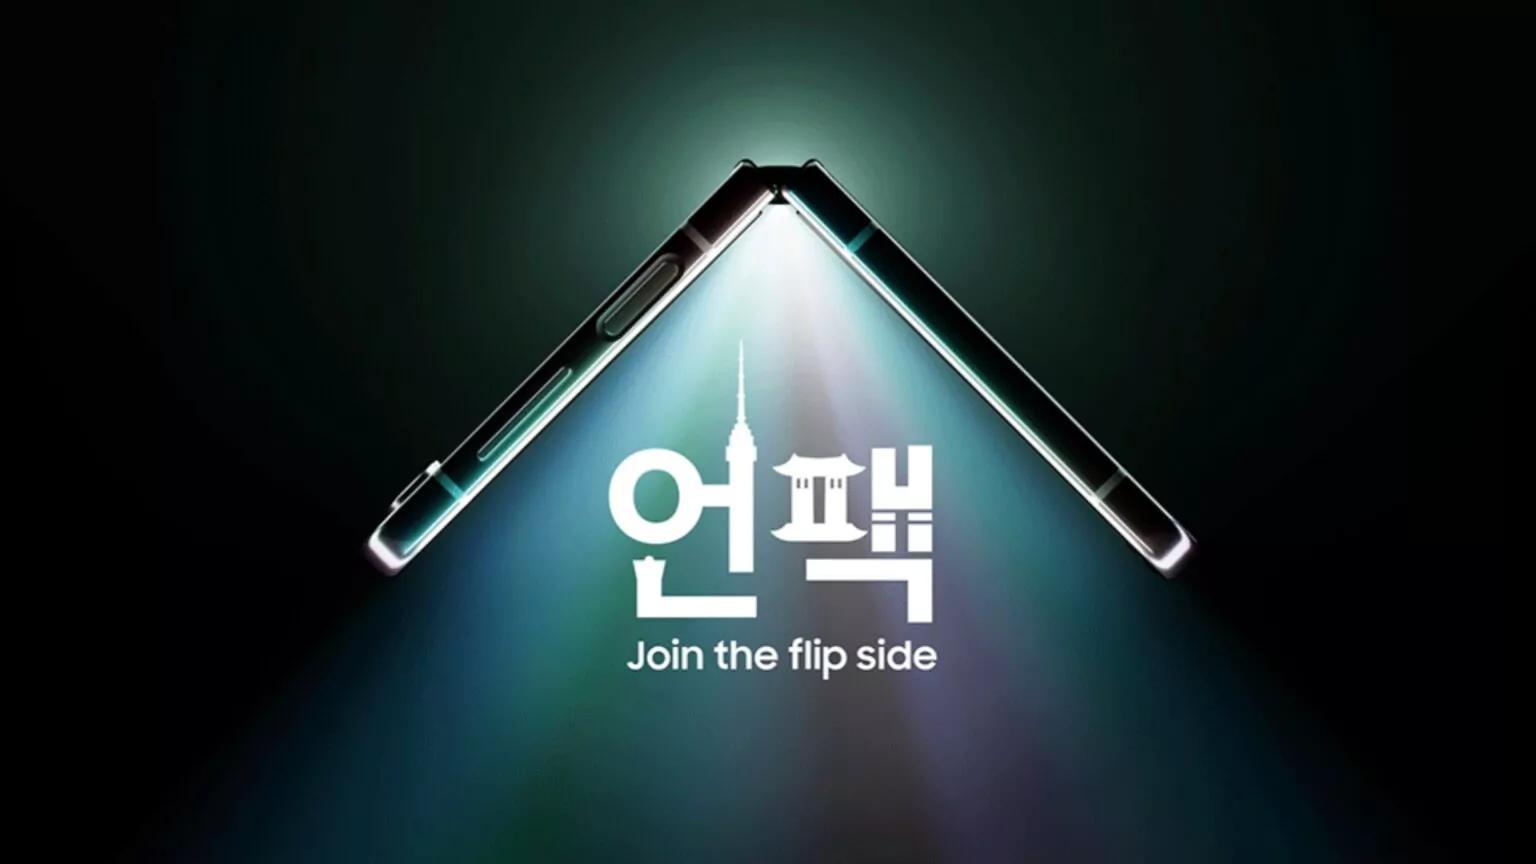 Samsung Unpacked 2023 Galaxy Z Fold 5 Galaxy Z Flip 5 event invite 1536w 864h.jpg